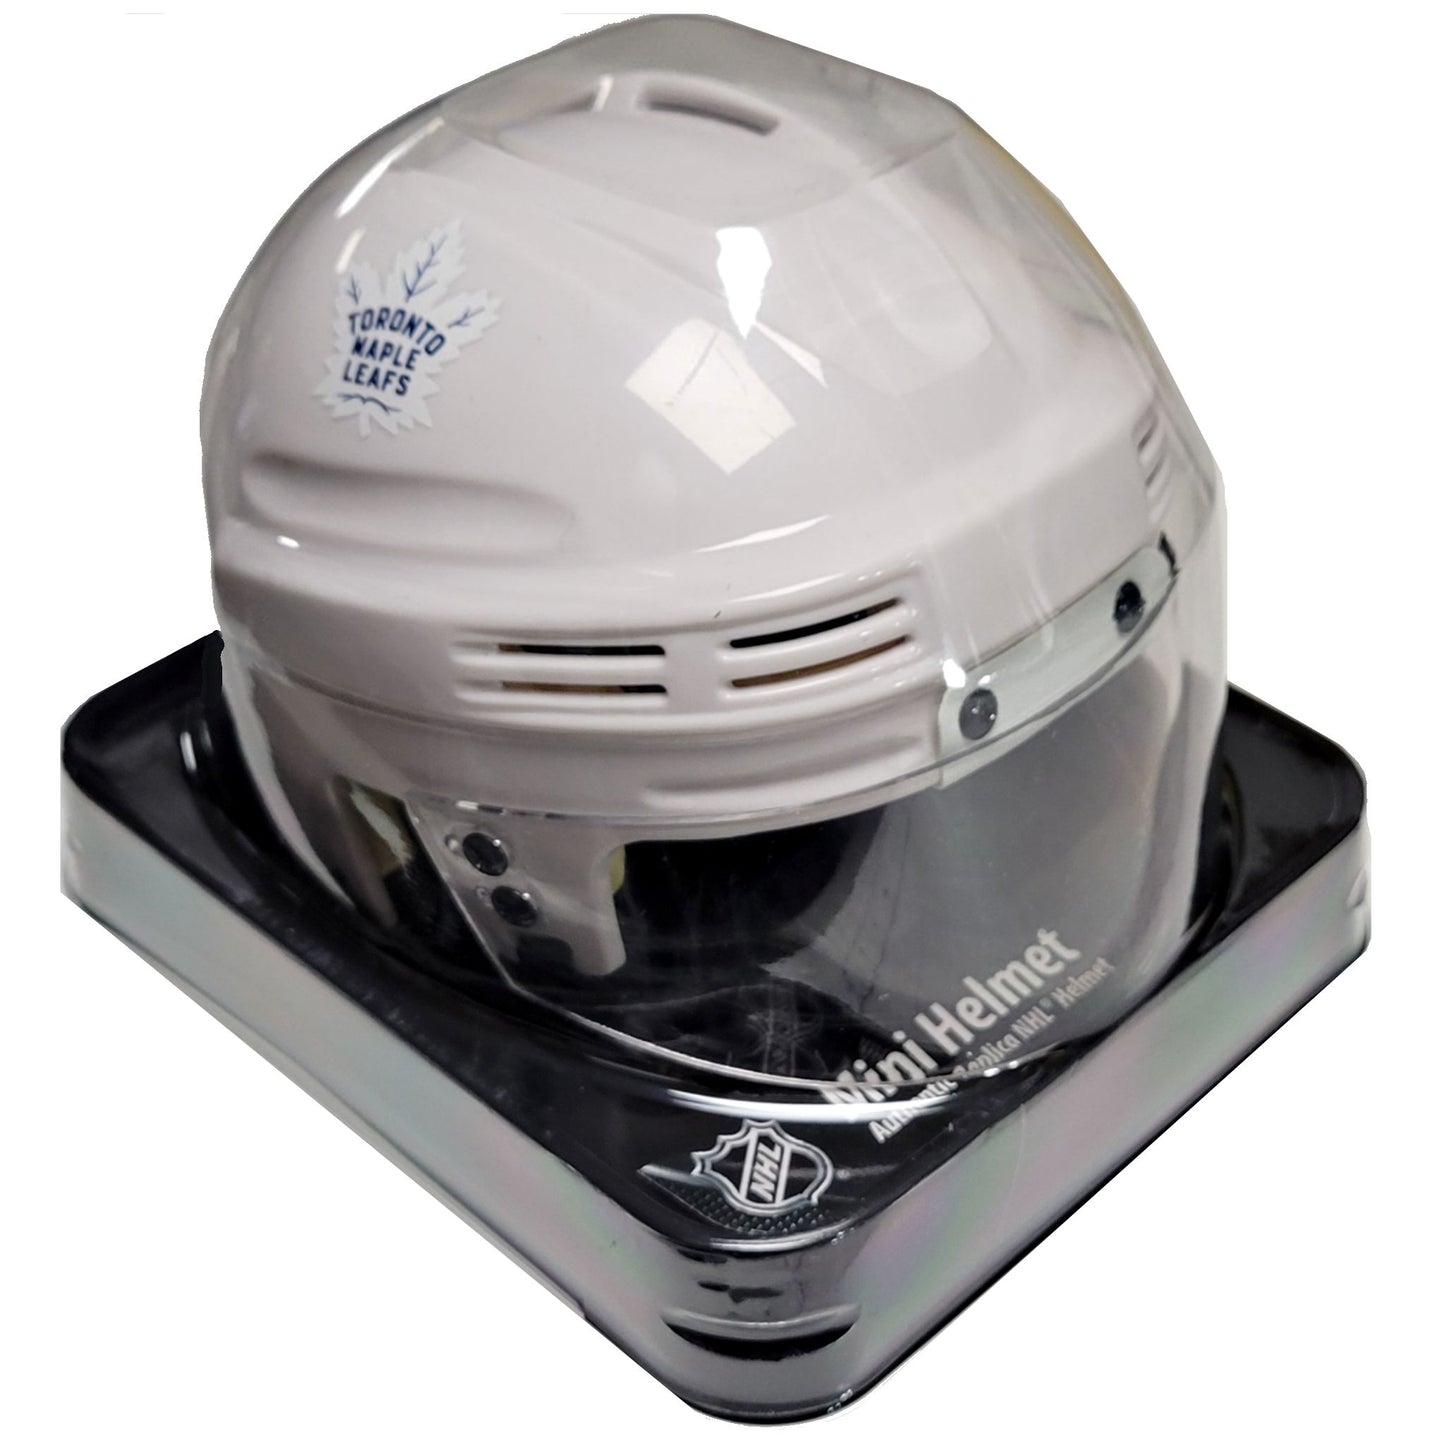 Toronto Maple Leafs White Unsigned Collectible Mini Hockey Helmet